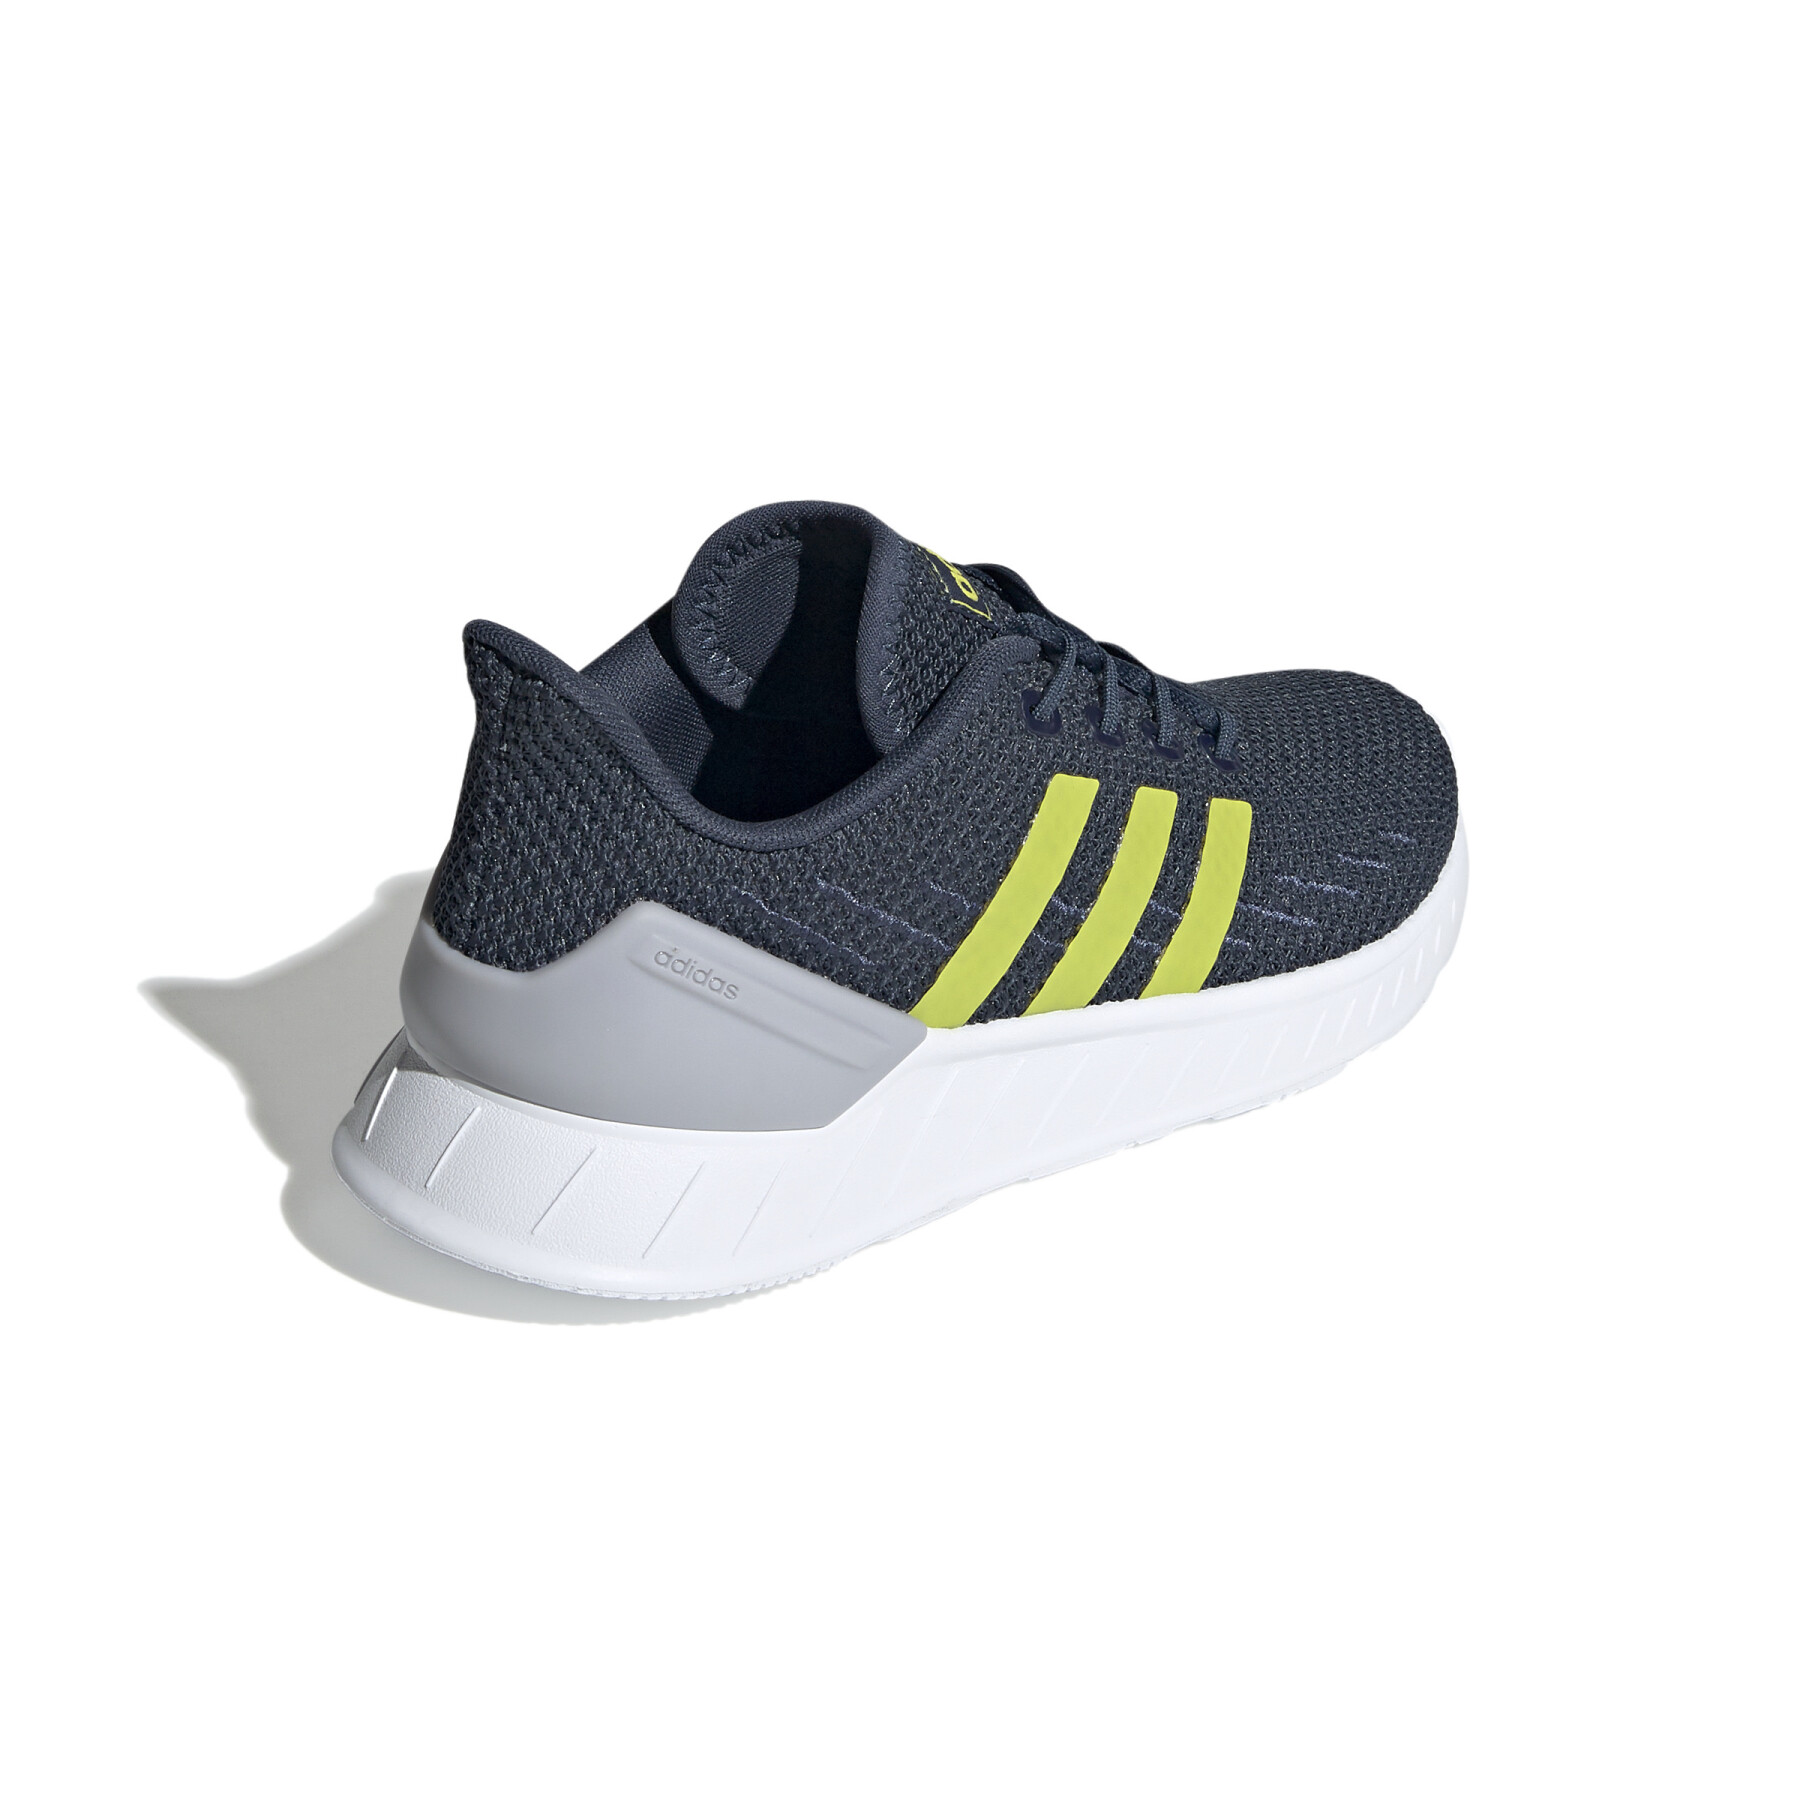 Children's sneakers adidas Querstar Flow Nxt